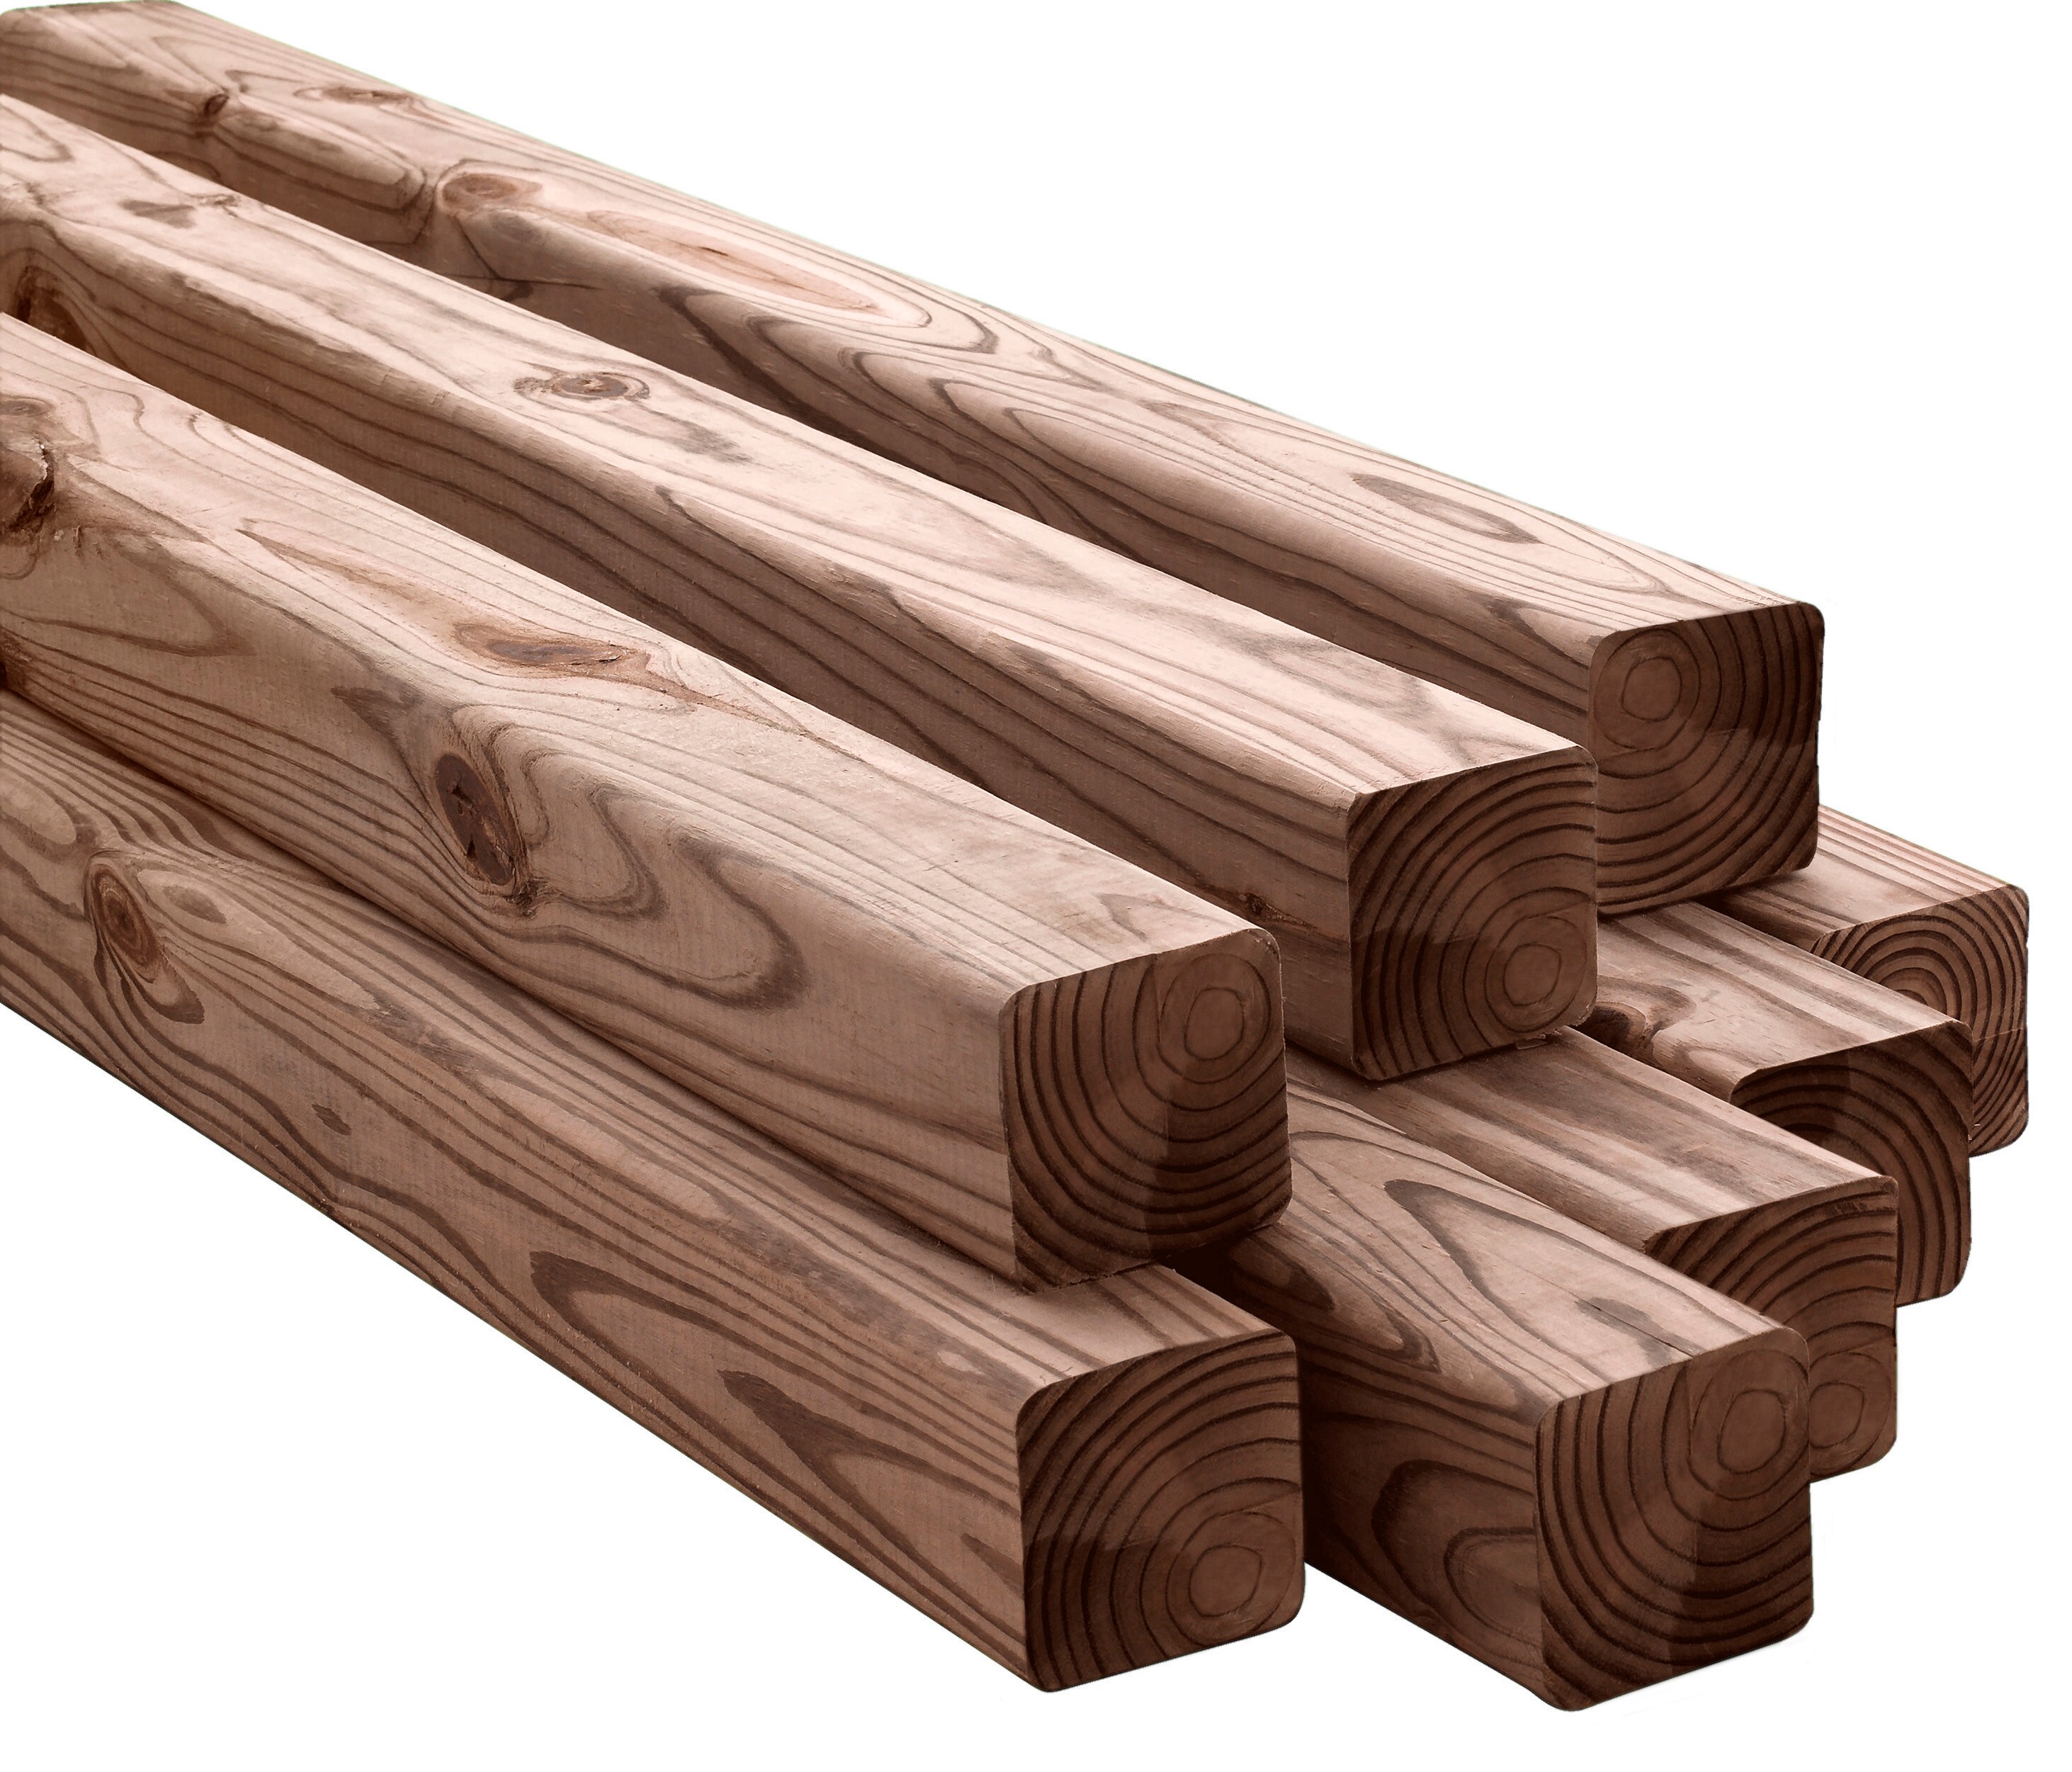 Drpus 4x4x16 2 40 Acq Treate In The Pressure Treated Lumber